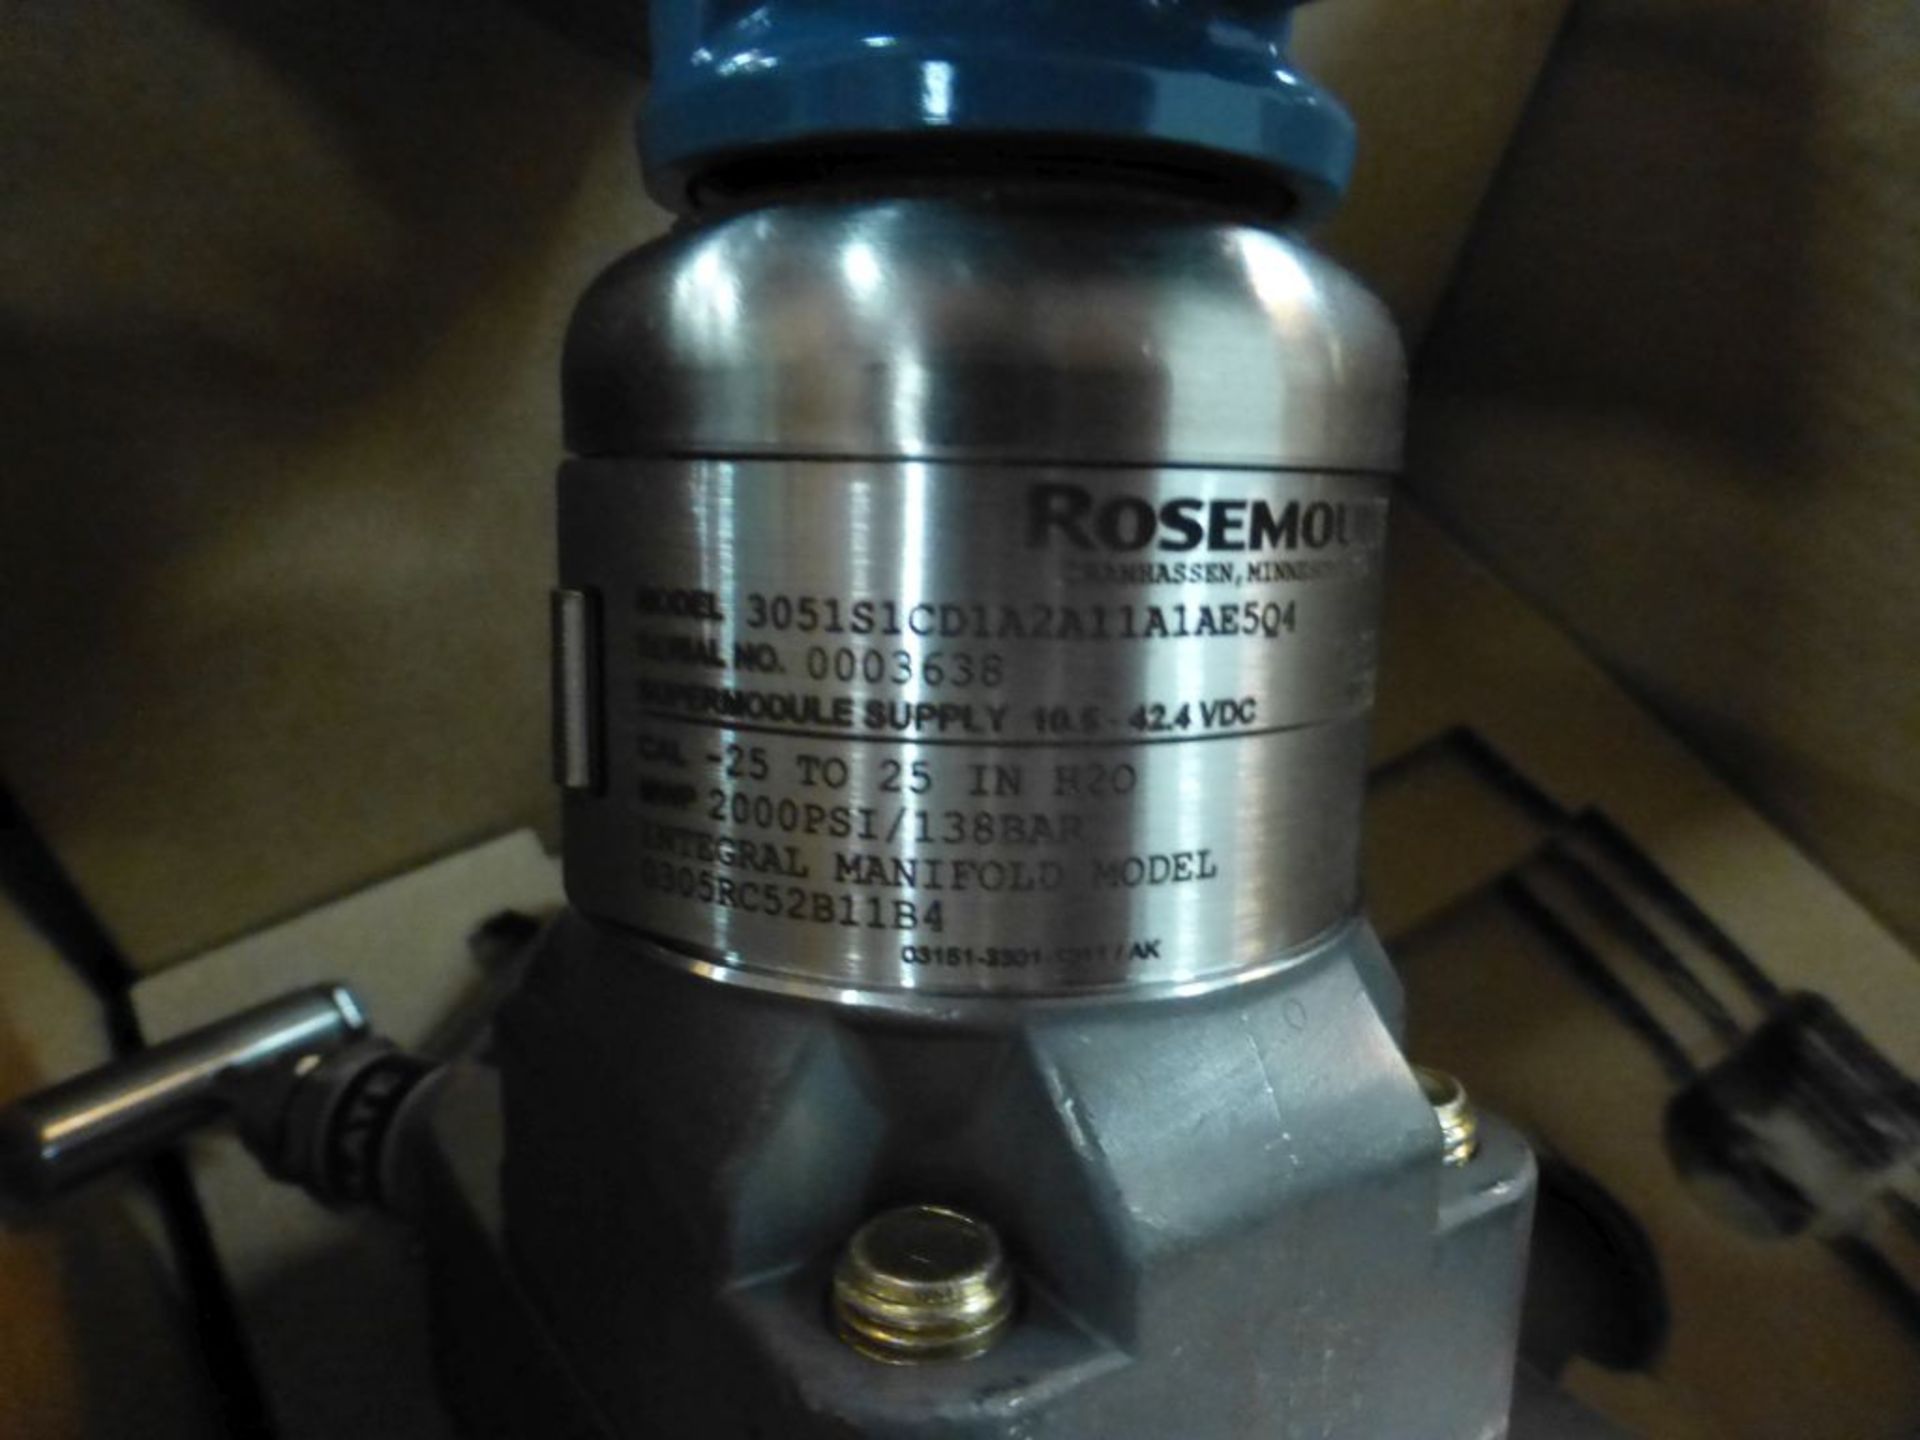 Emerson Rosemount Pressure Transmitter - Part No. C305RC52B11; Model No. 3051S1CD1A2A11A1AE5Q4; - Image 6 of 8